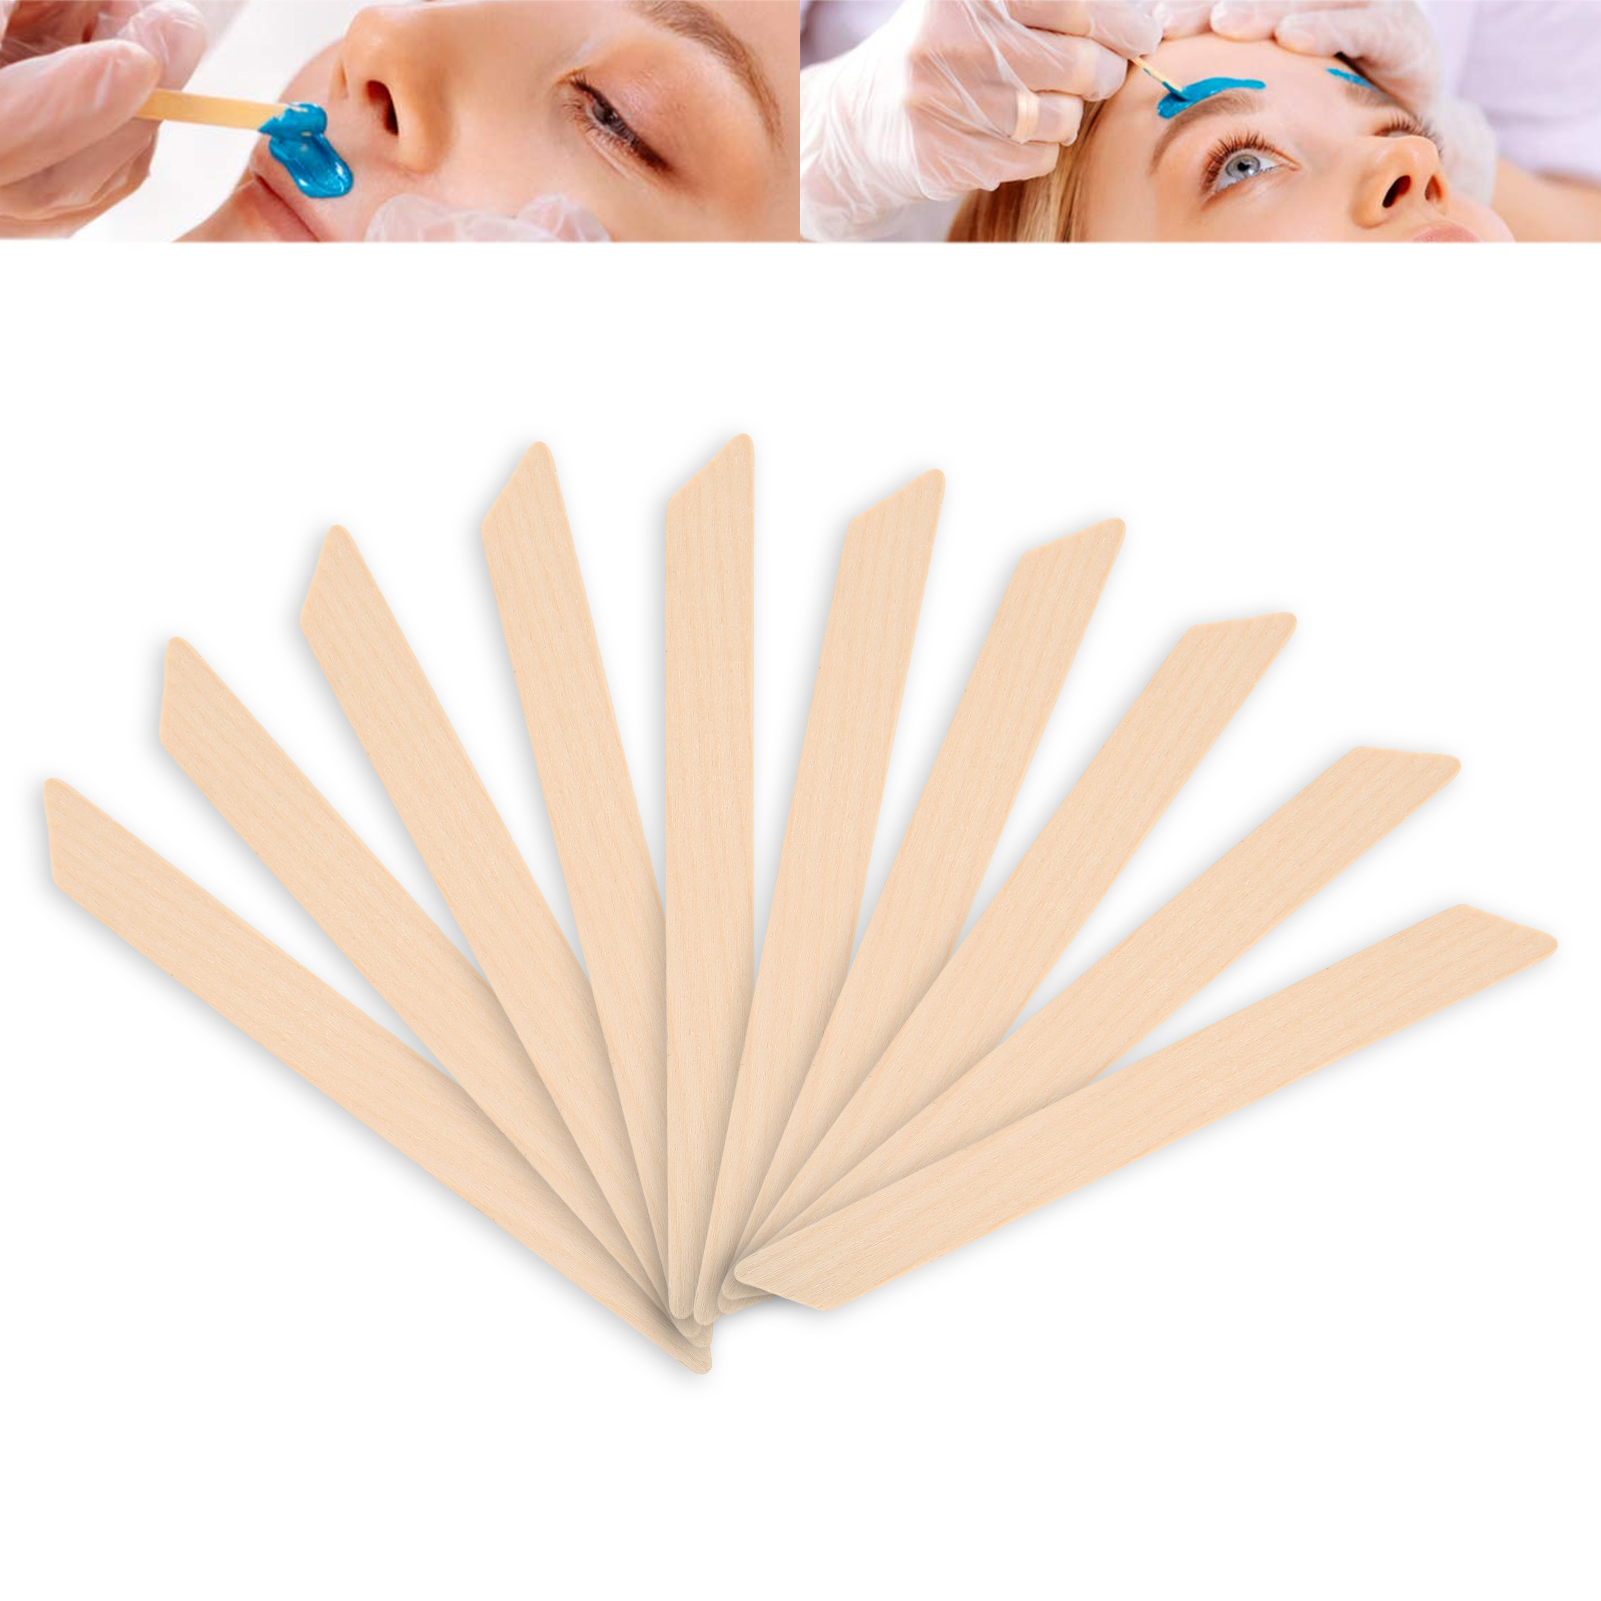 TOPINCN 10pcs Wooden Wax Sticks Wax Spatulas Wax Applicator Leg Arm Facial  Hair Removal Tool,Wooden Wax Applicator 